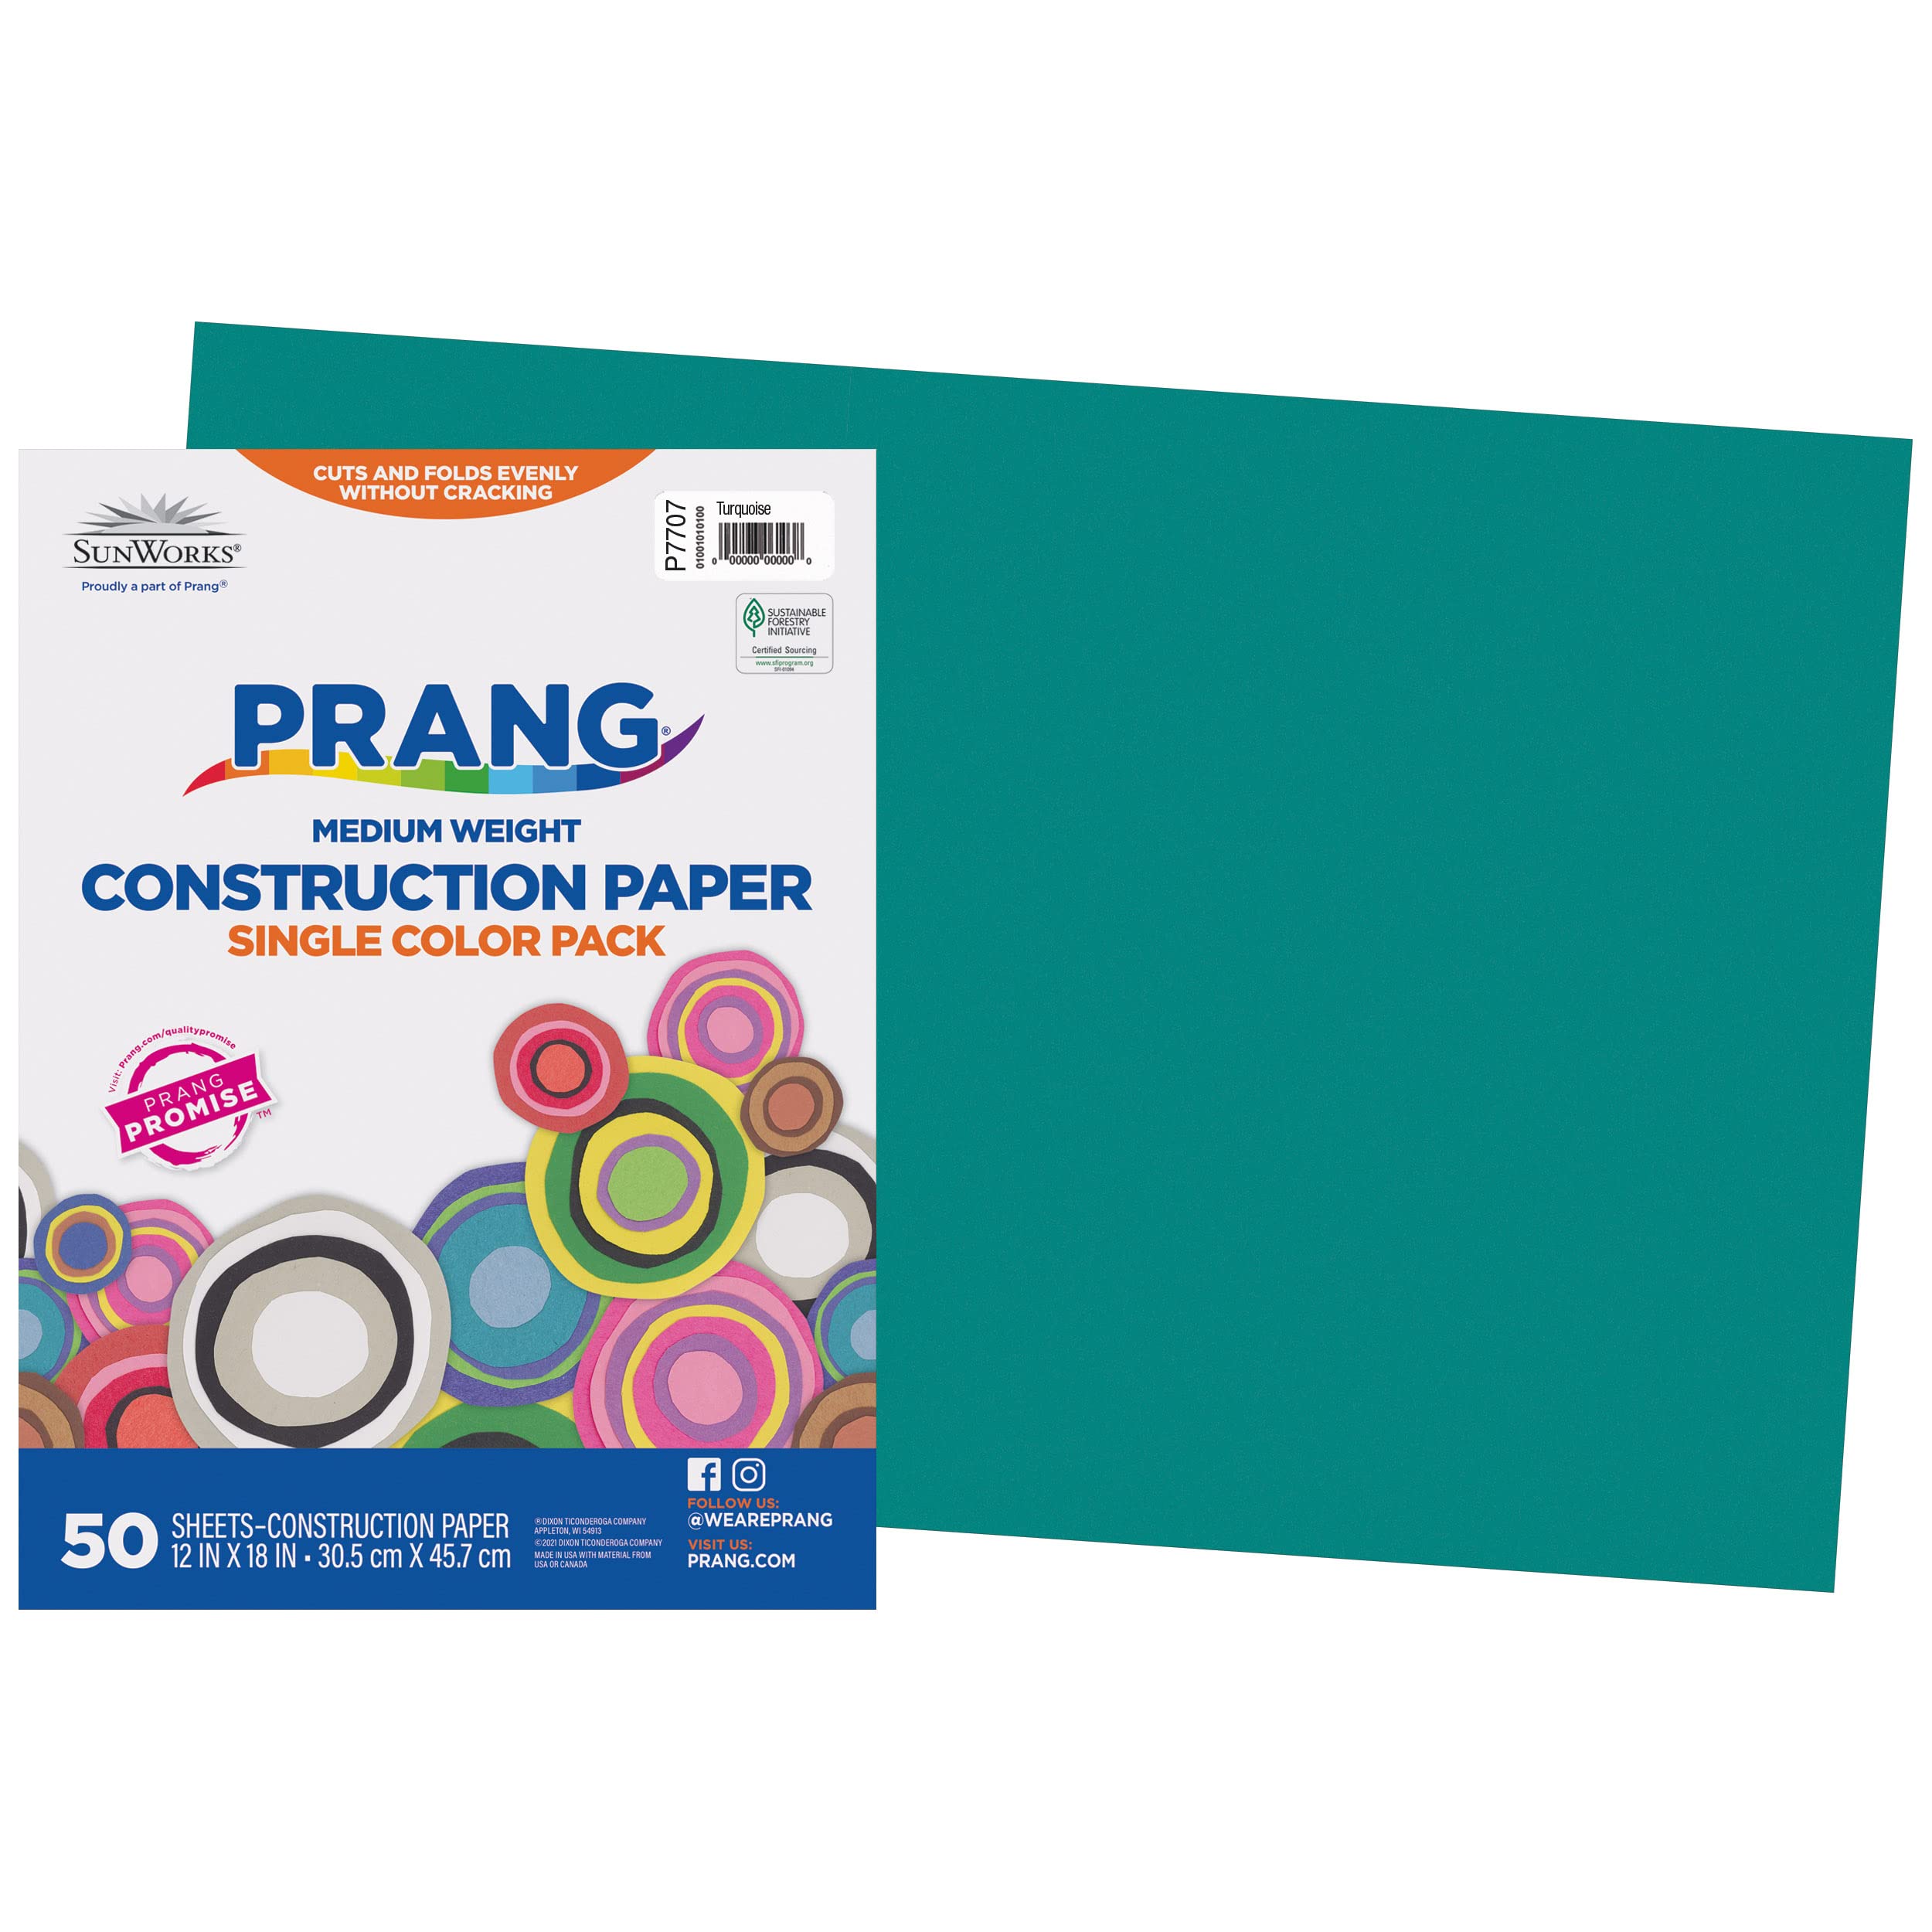 Prang (Formerly SunWorks) Construction Paper White 12 x 18 50 Sheets